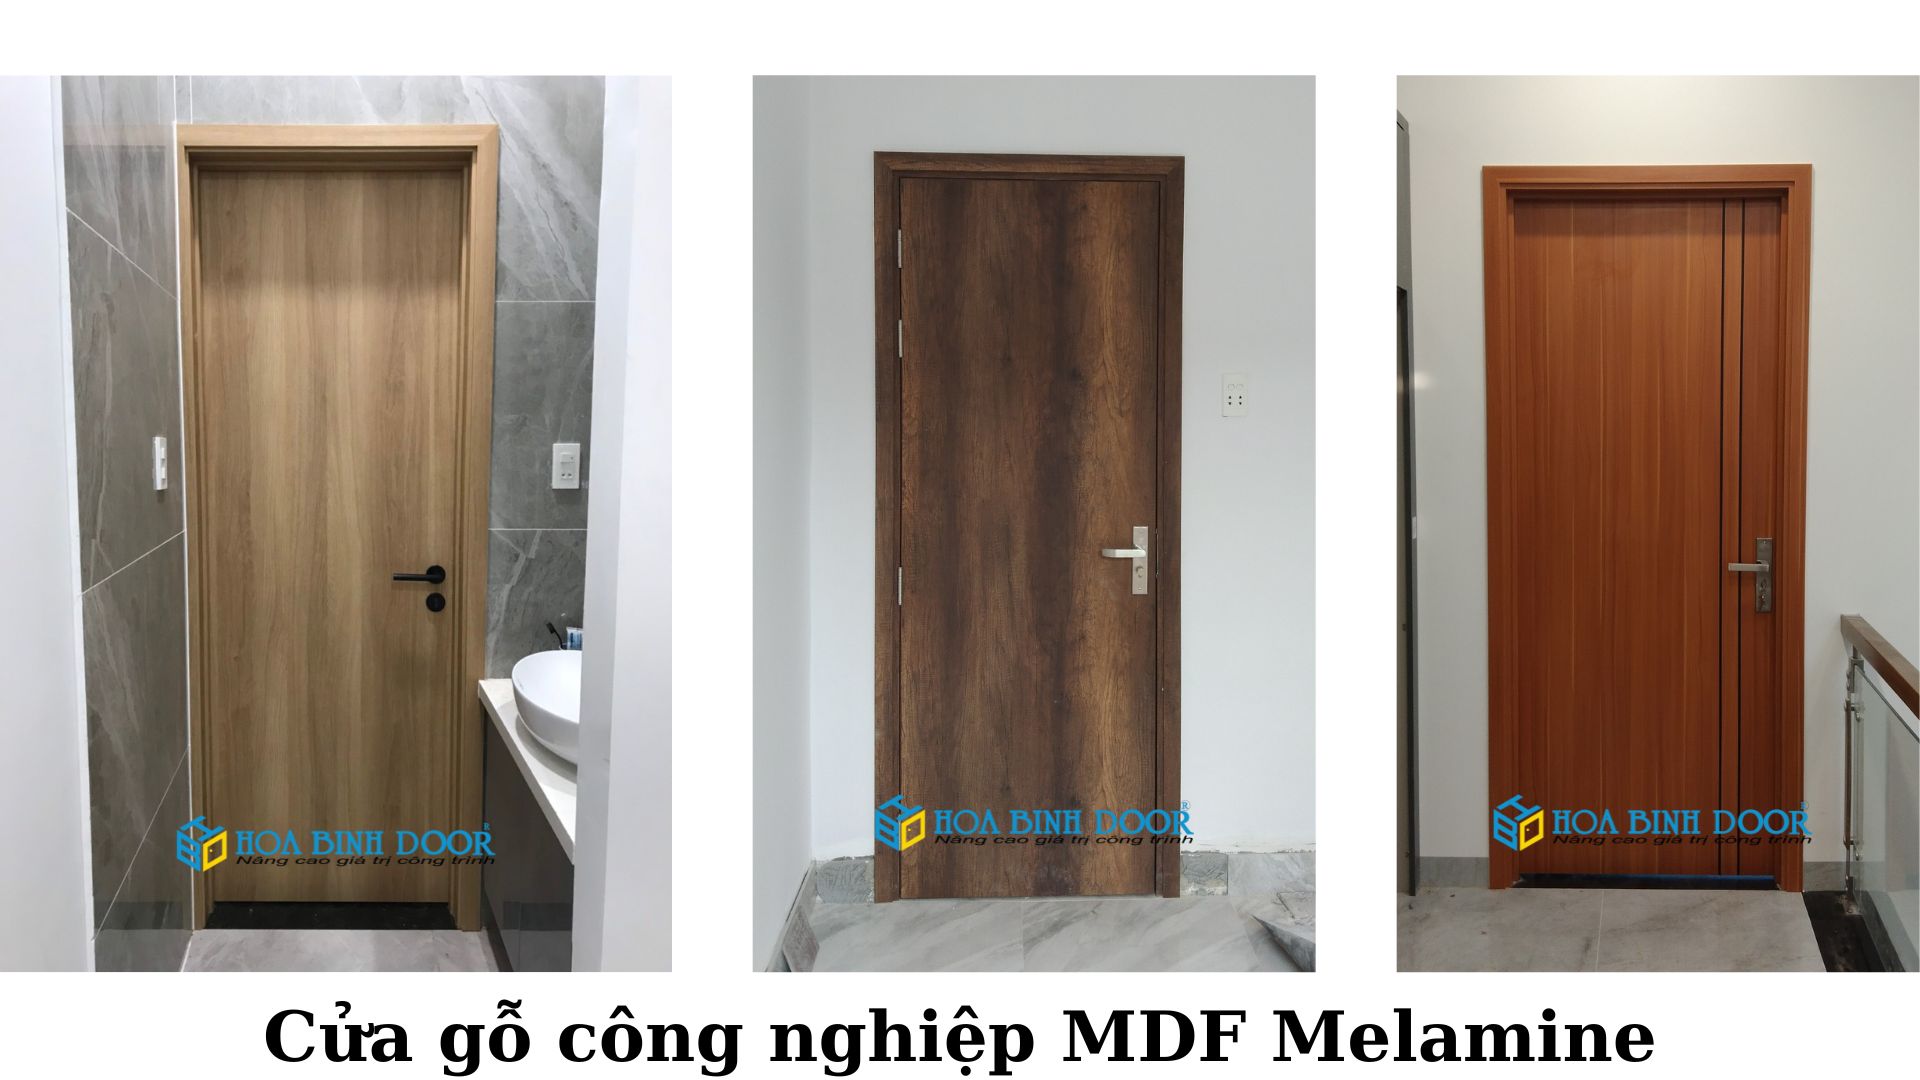 Cua-go-cong-nghiep-MDF-Melamine-4.jpg